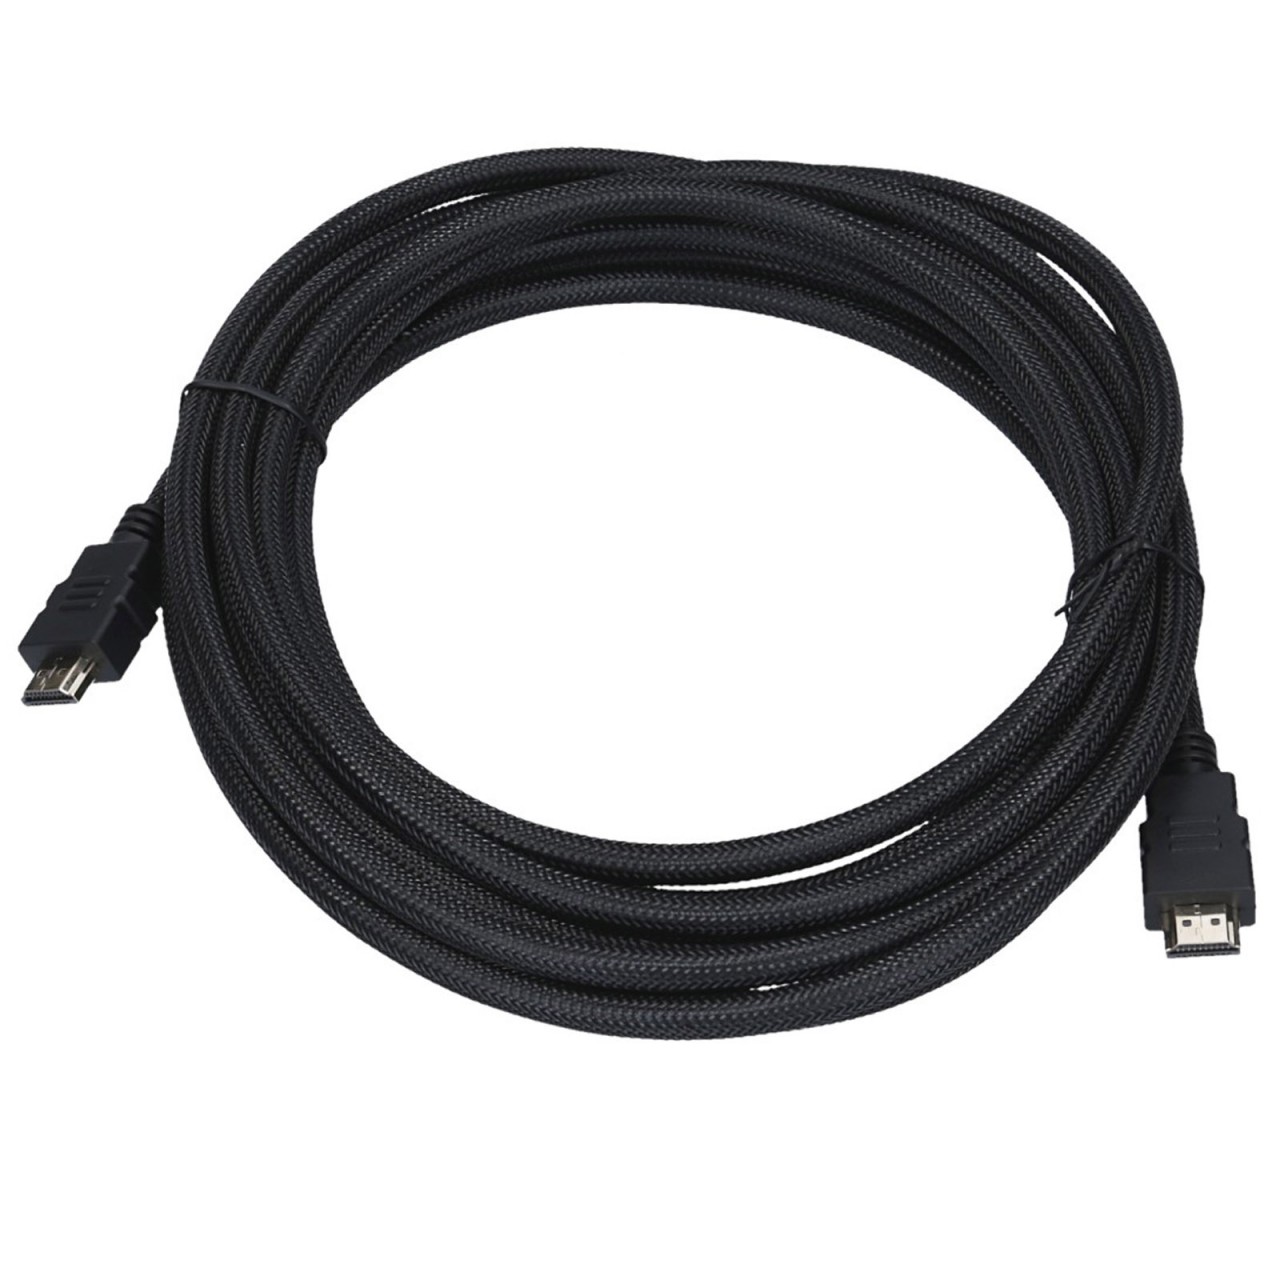 ENOVA EC-H1-3 HDMI cable Ultra High Speed 4K - HDMI 2.0